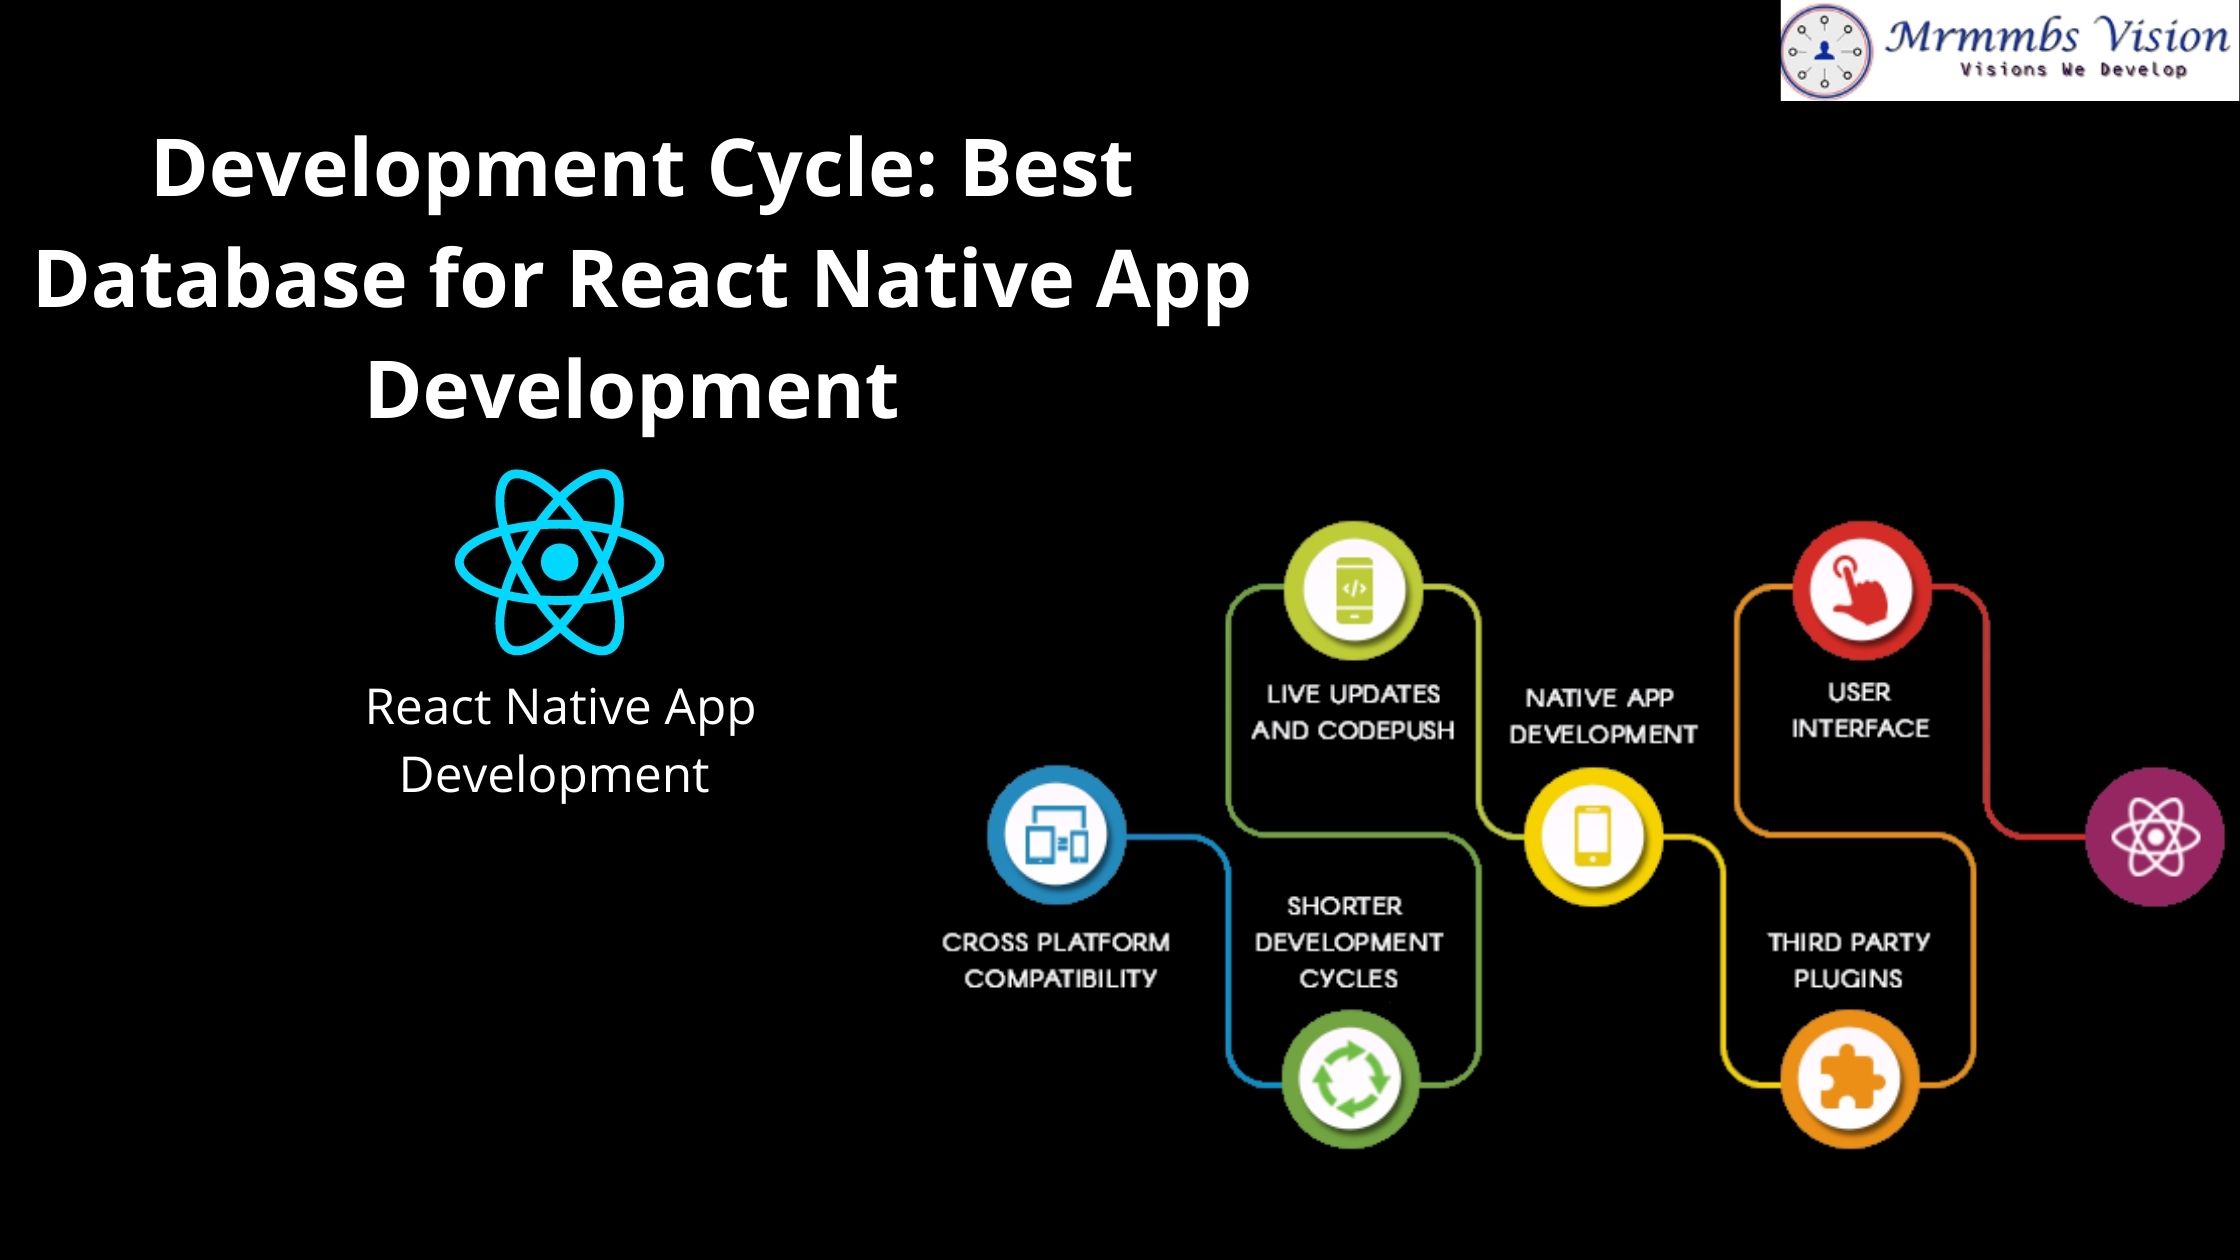 Development Cycle: Best Database for React Native App Development